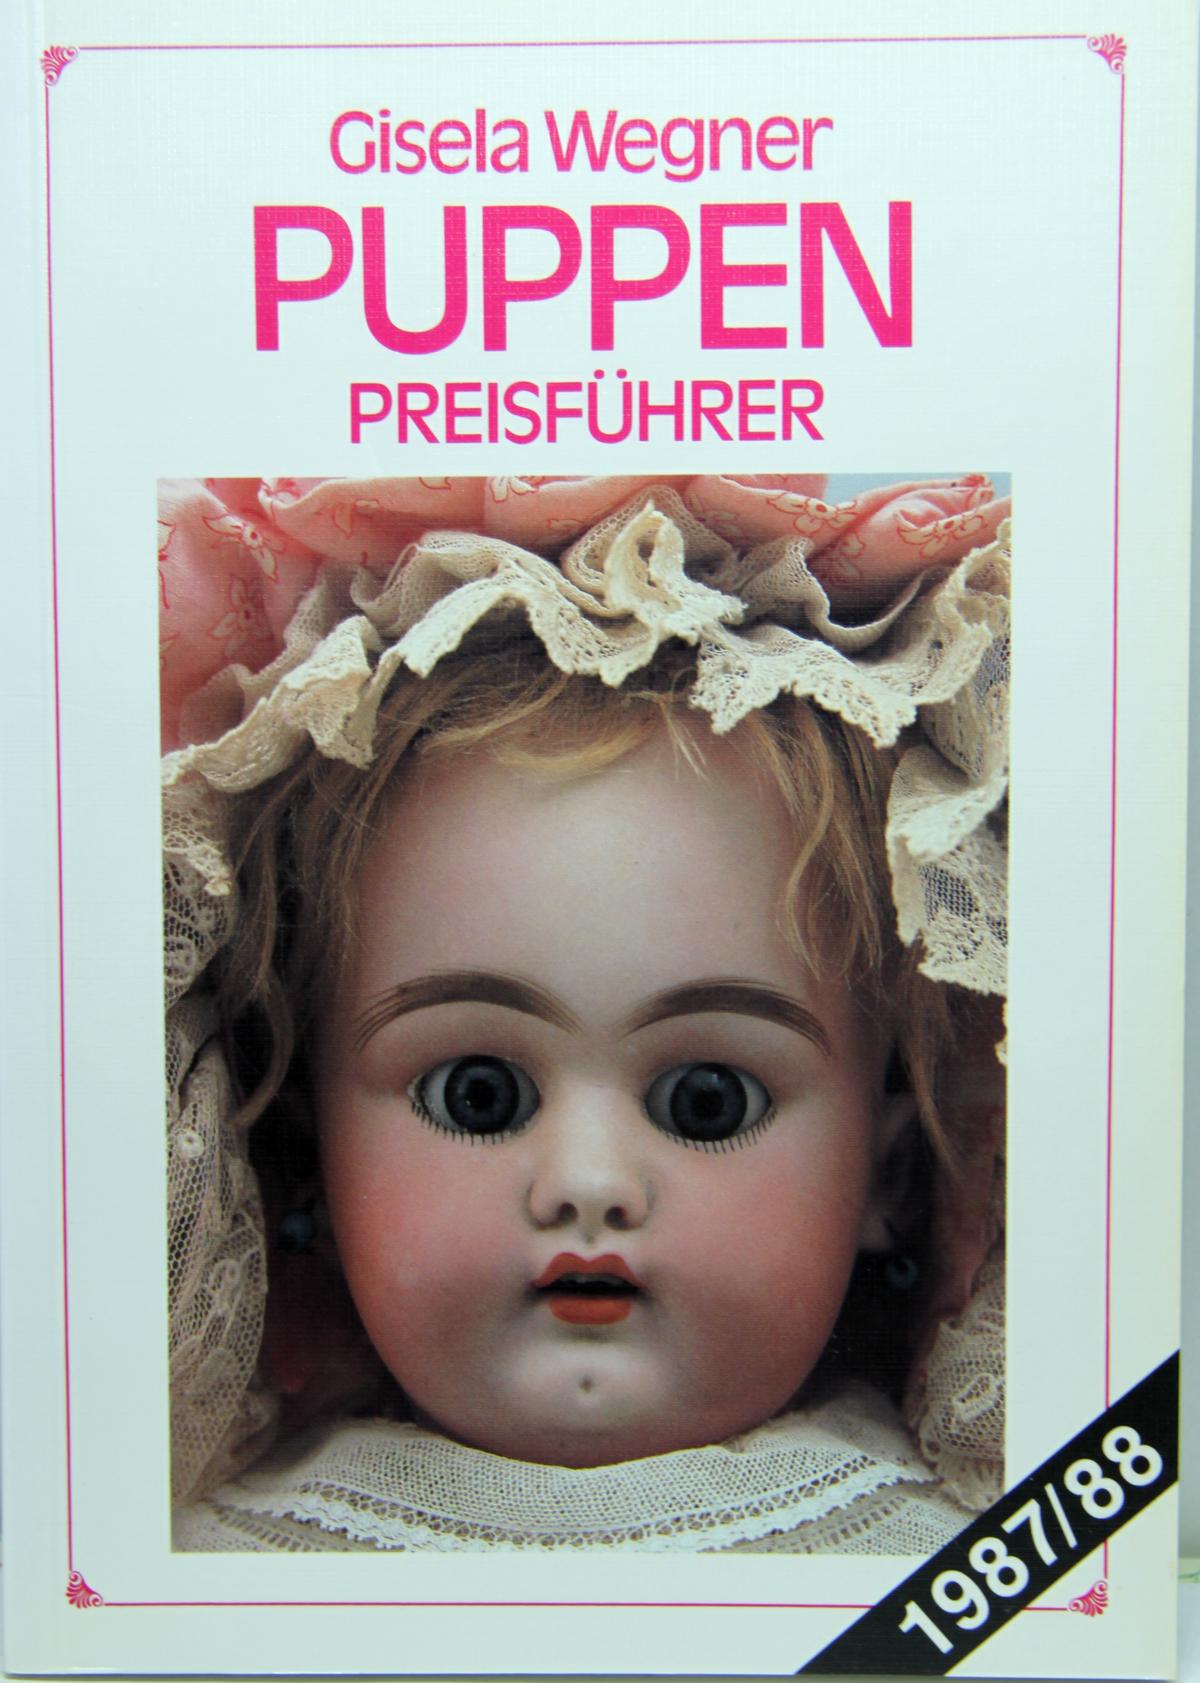 Buch "Puppen Preisführer" 1987/88 G. Wegner